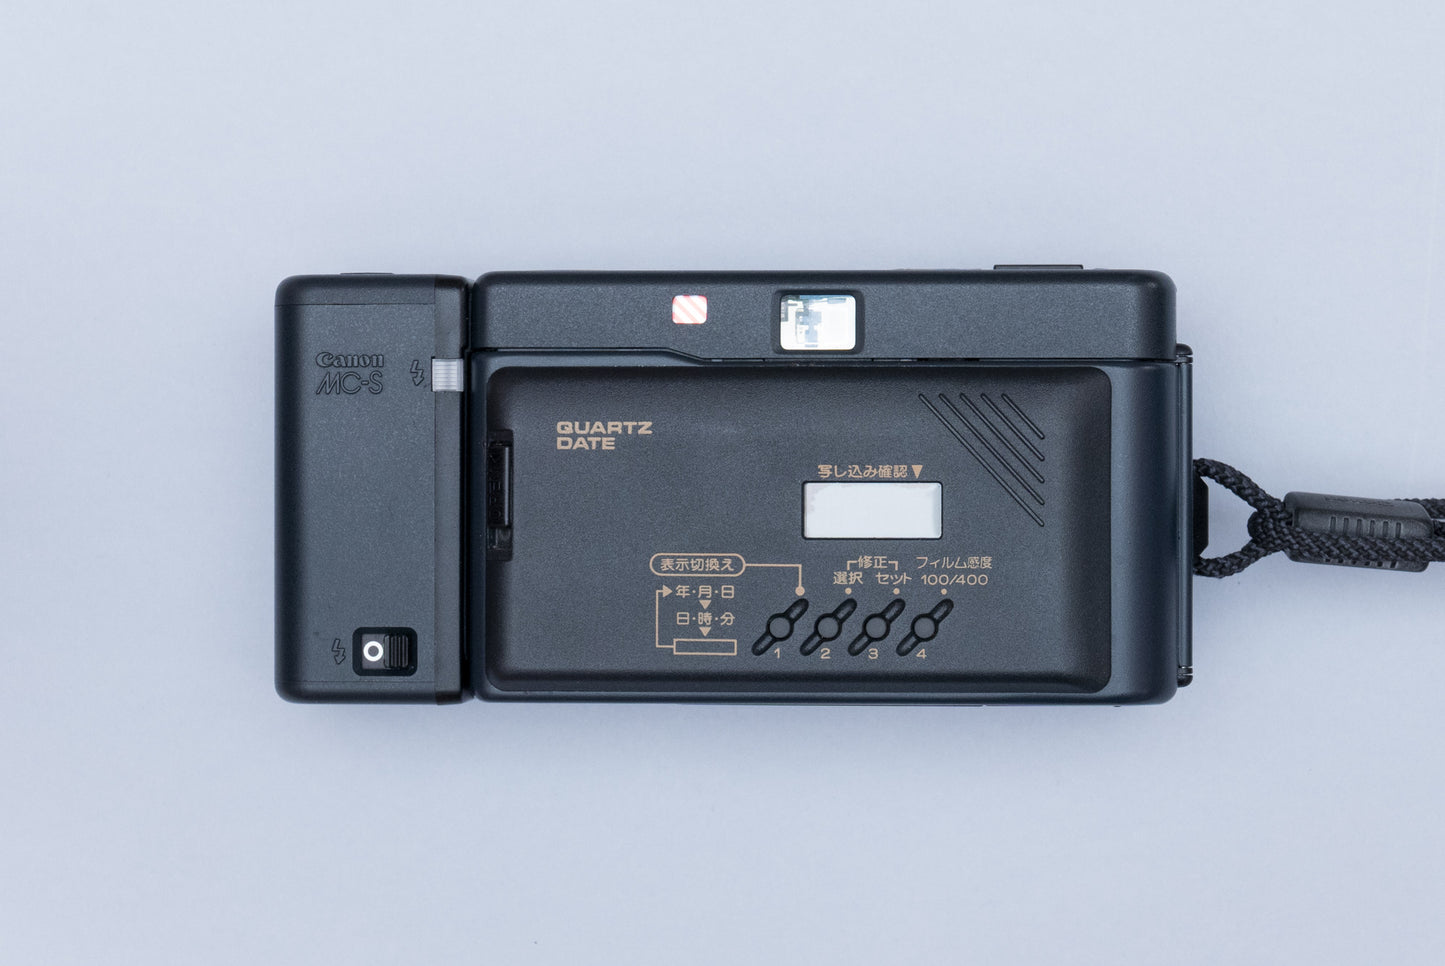 Canon MC with MC-S Flash Compact 35mm Film Camera